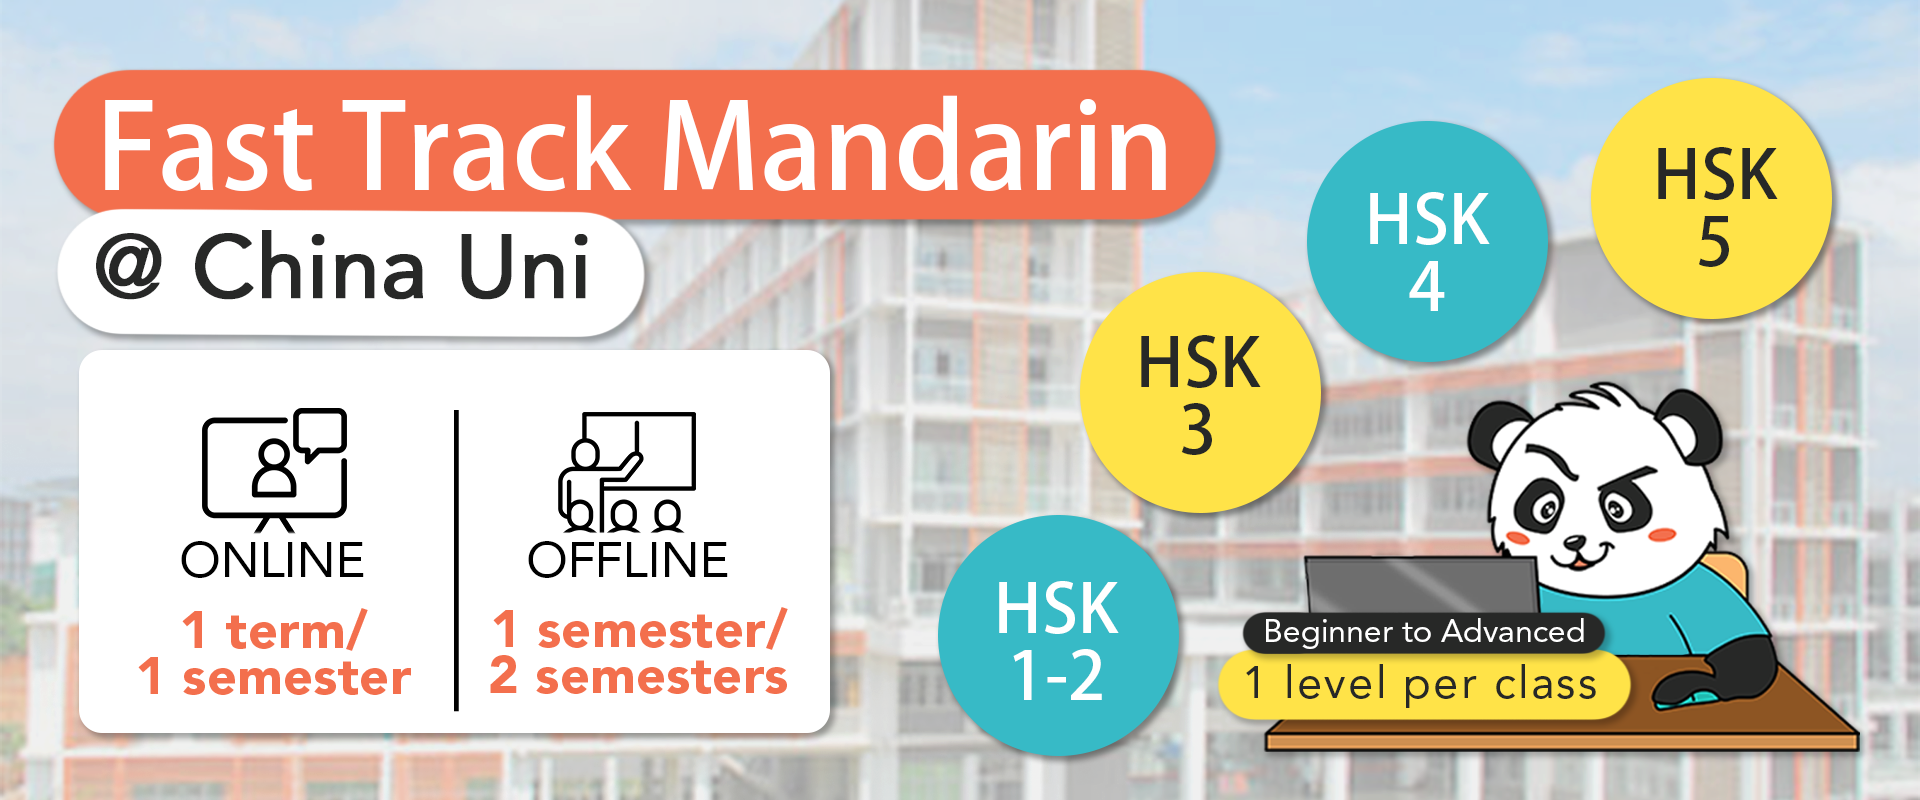 HSK HSKK Fast Track Mandarin at China Uni with Elite Chinese Desktop Banner